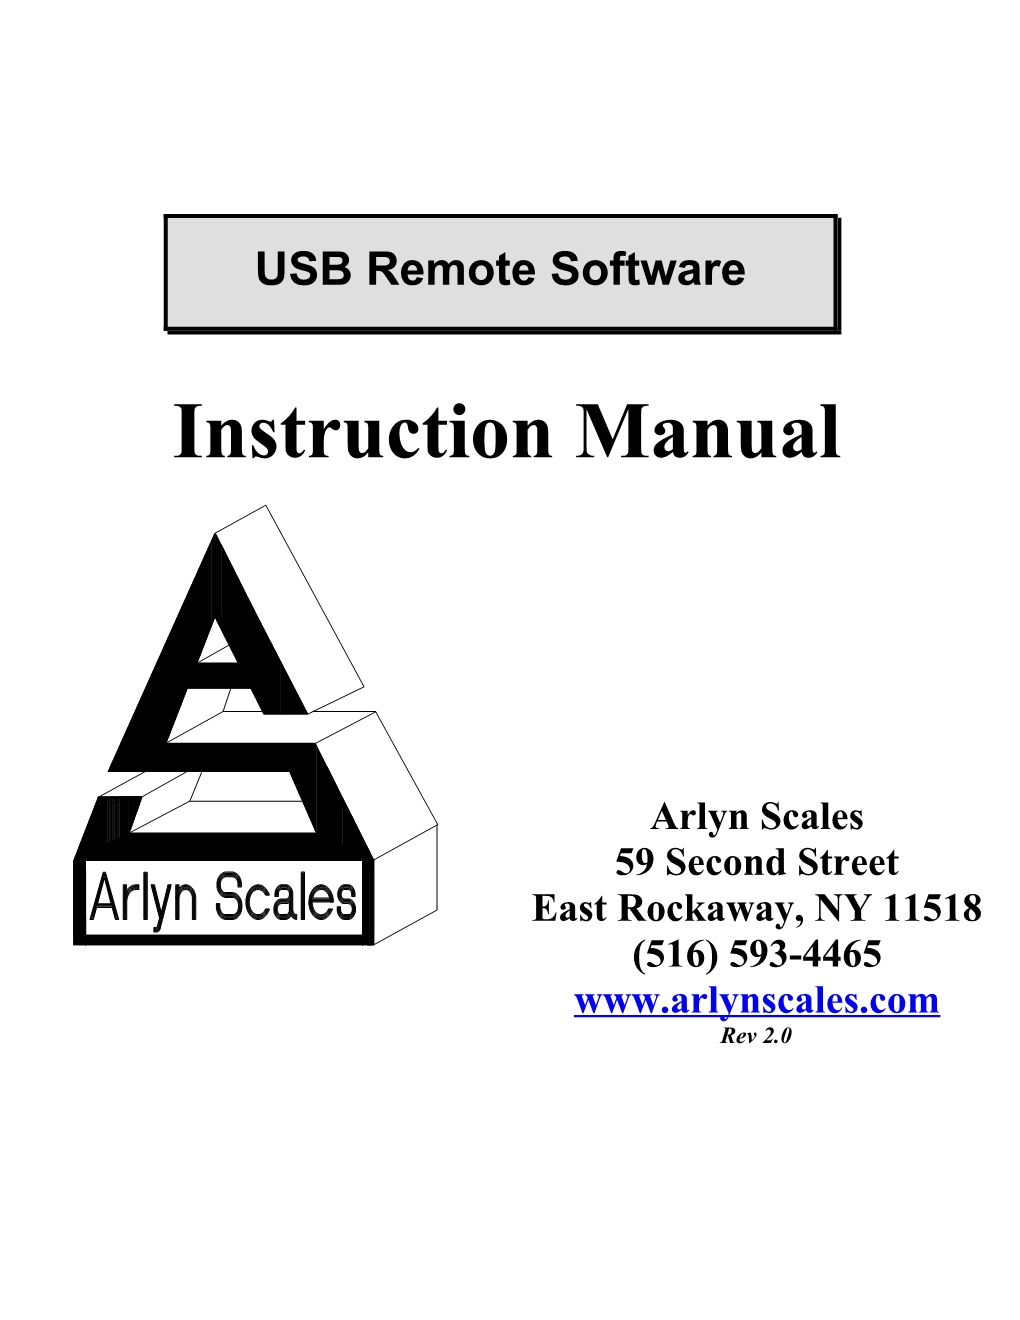 USB Remote Software